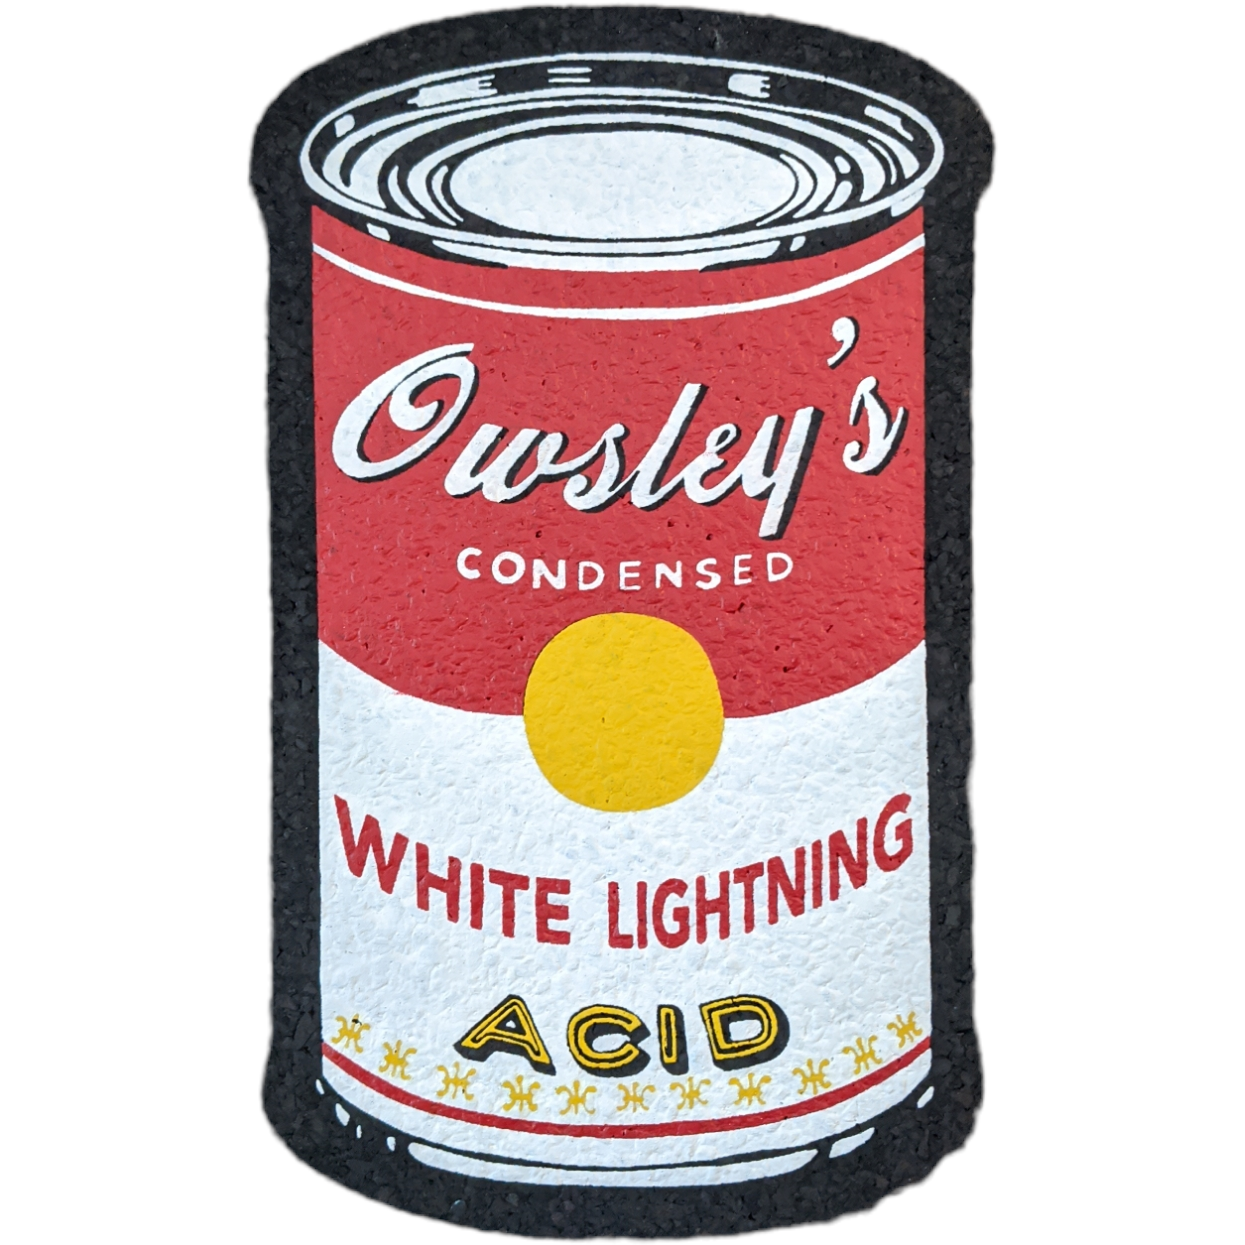 Wookerson "White Lightning" Moodmat